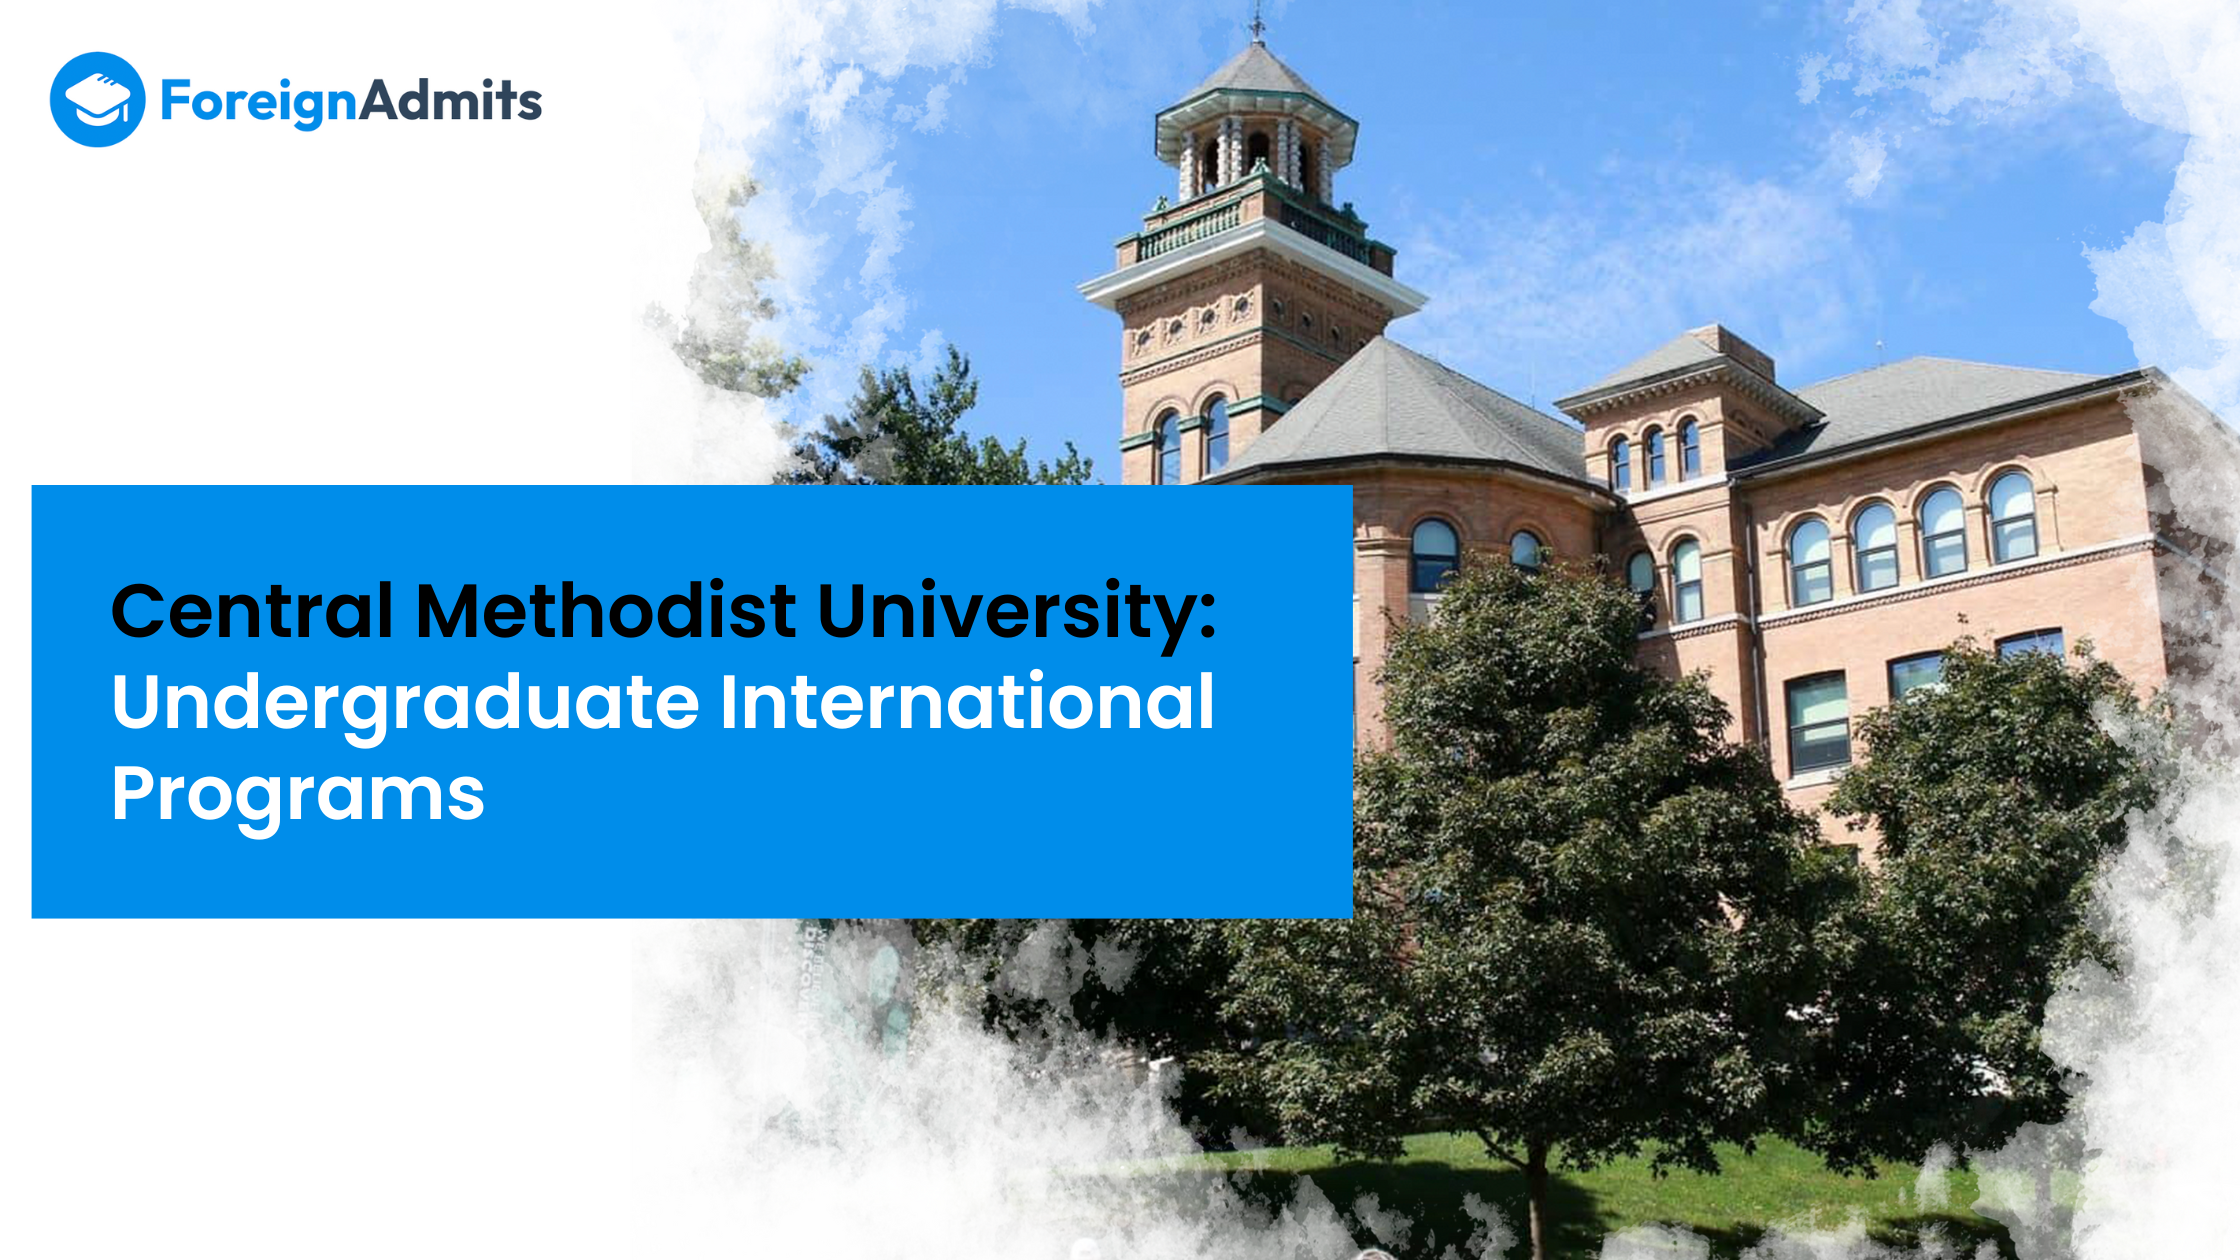 Central Methodist University: Undergraduate International Programs